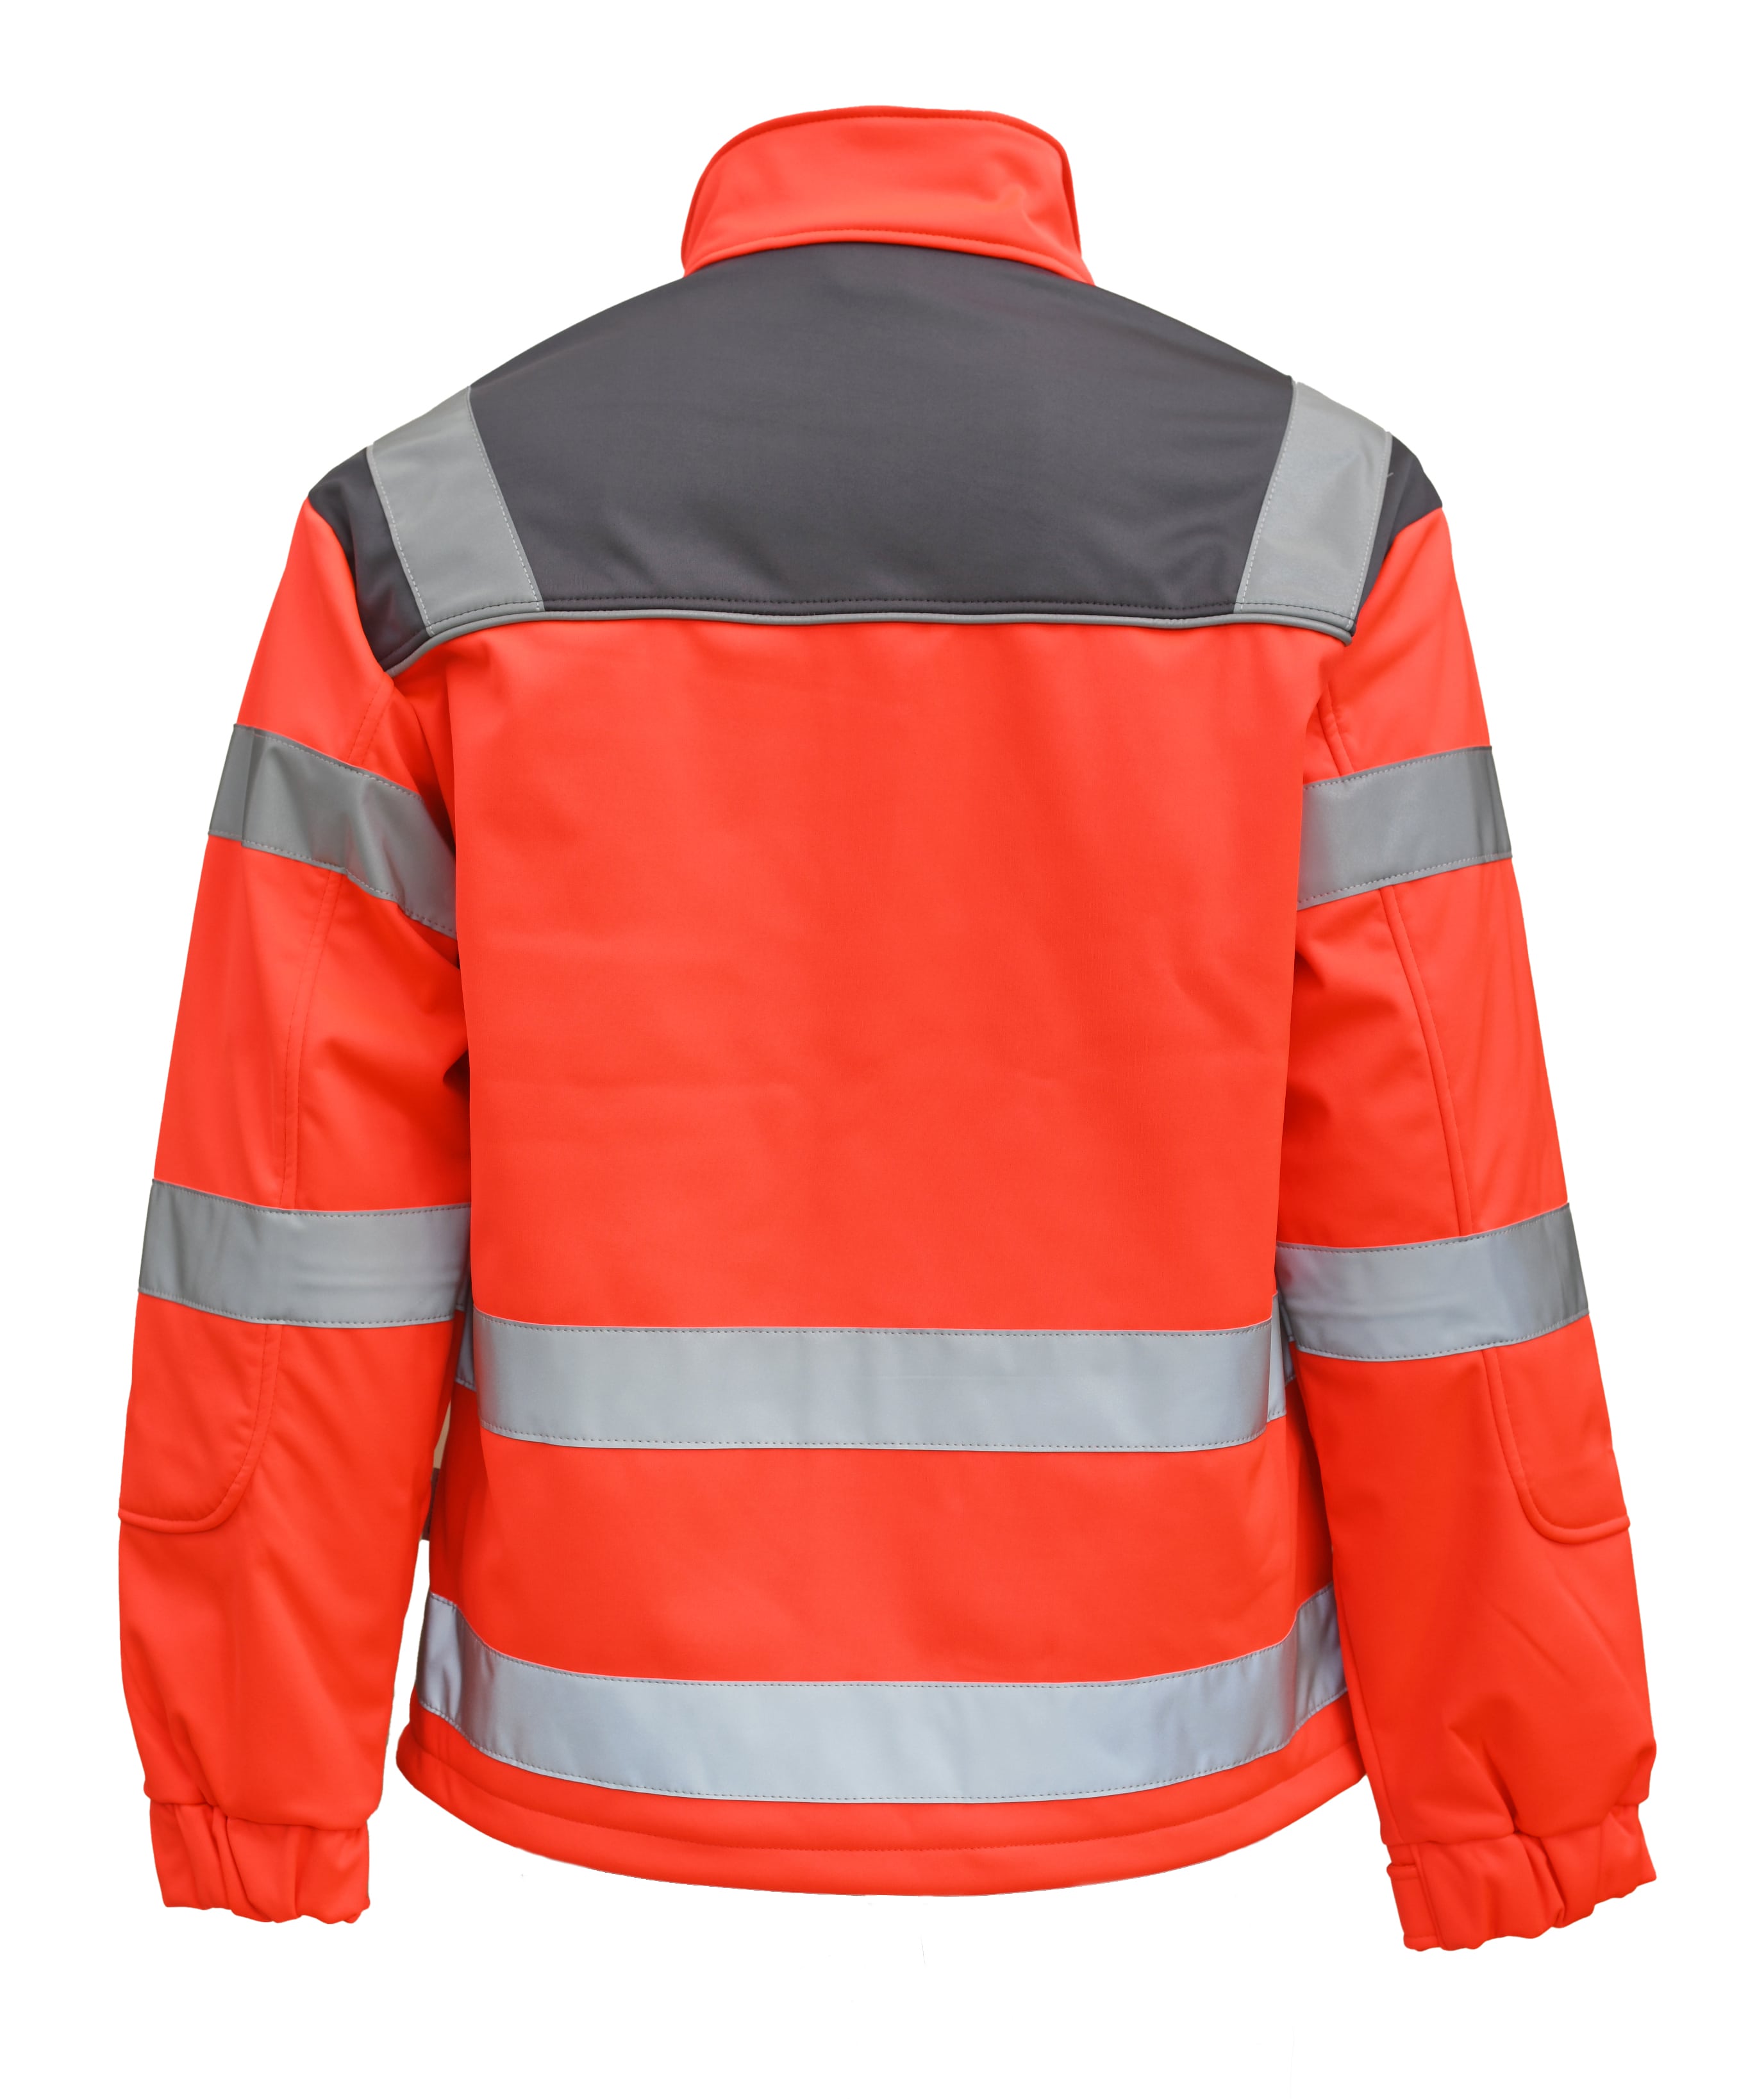 Rescuewear Softshelljacke Dynamic DRK HiVis DRK Neon Rot / Grau (Neu!!) - 4XL